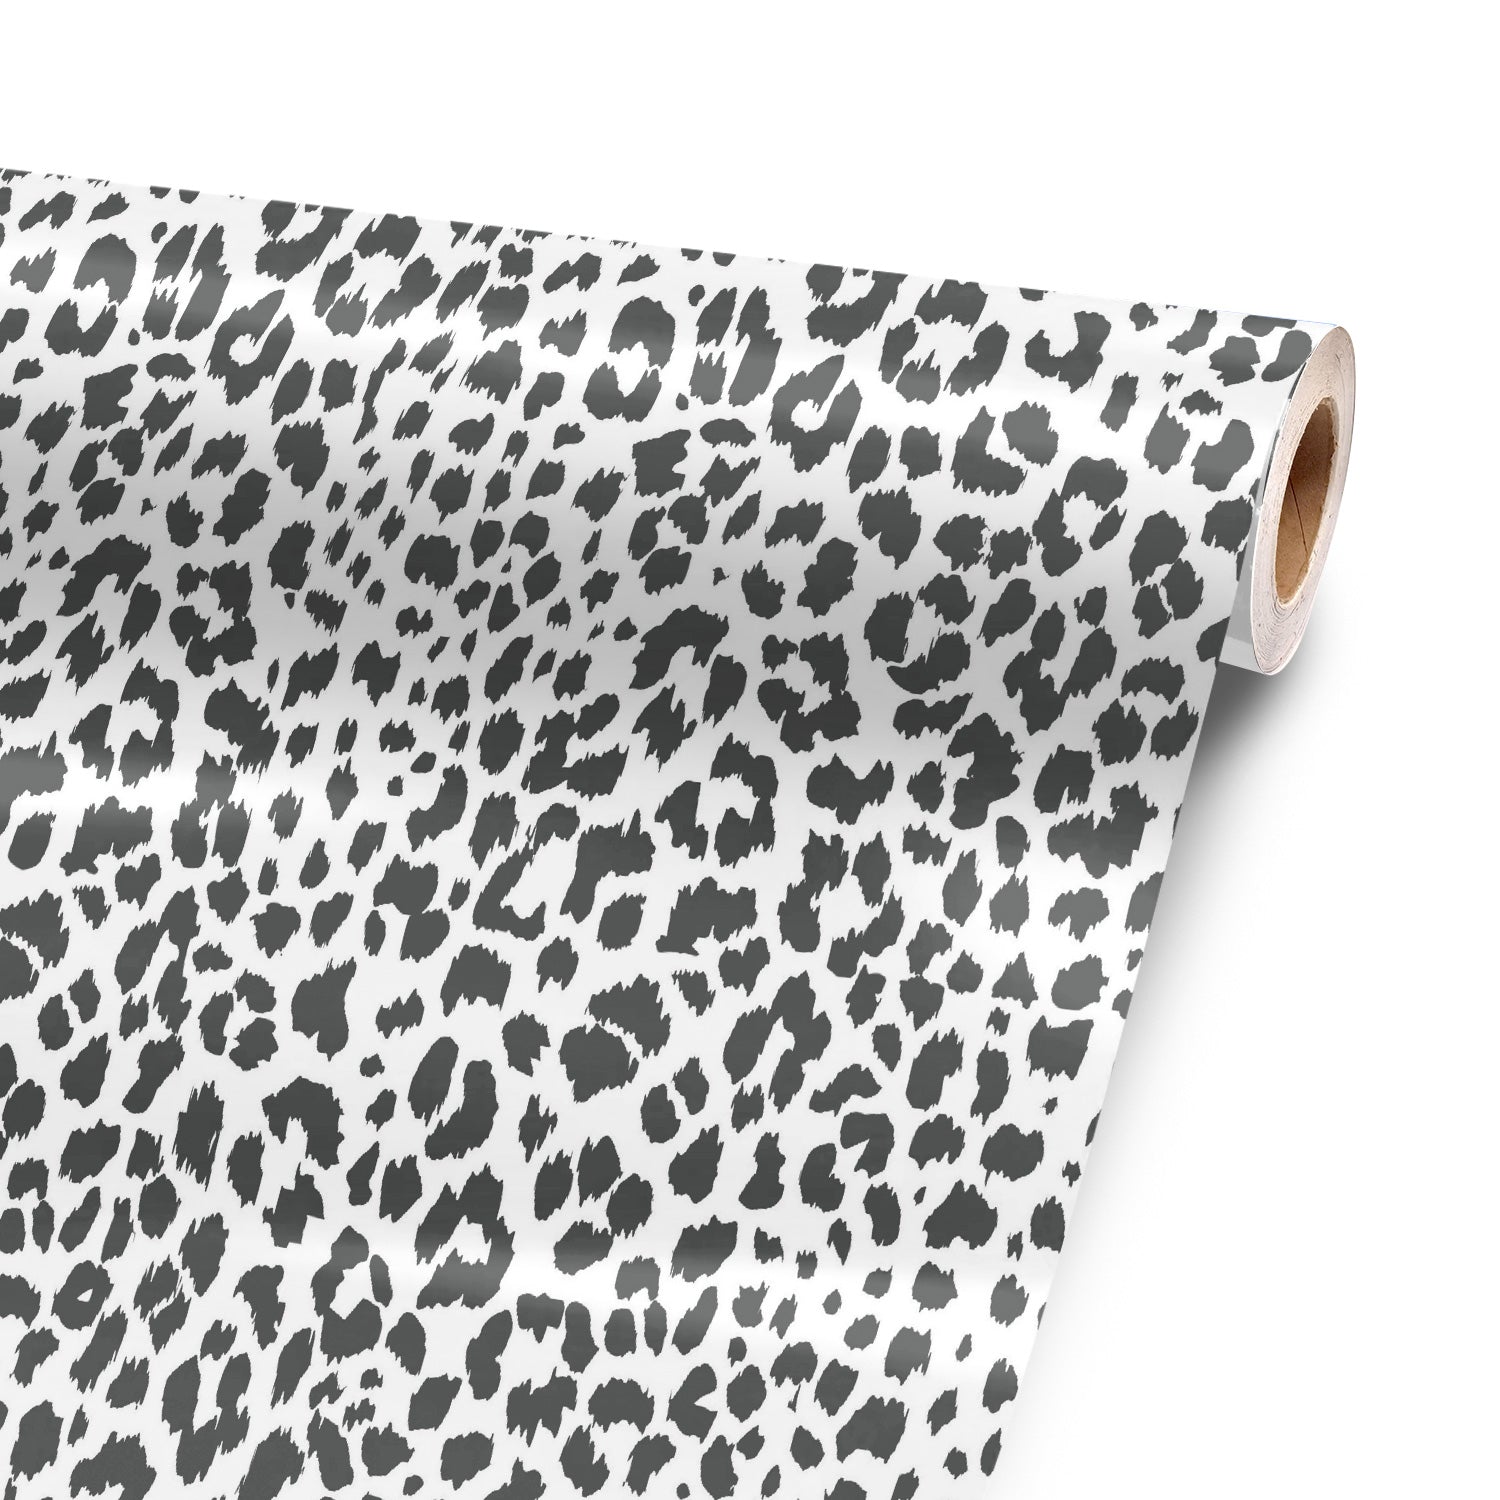 Leopard Skin Premium Vinyl Wrap for Stanley 40 Oz Tumbler 